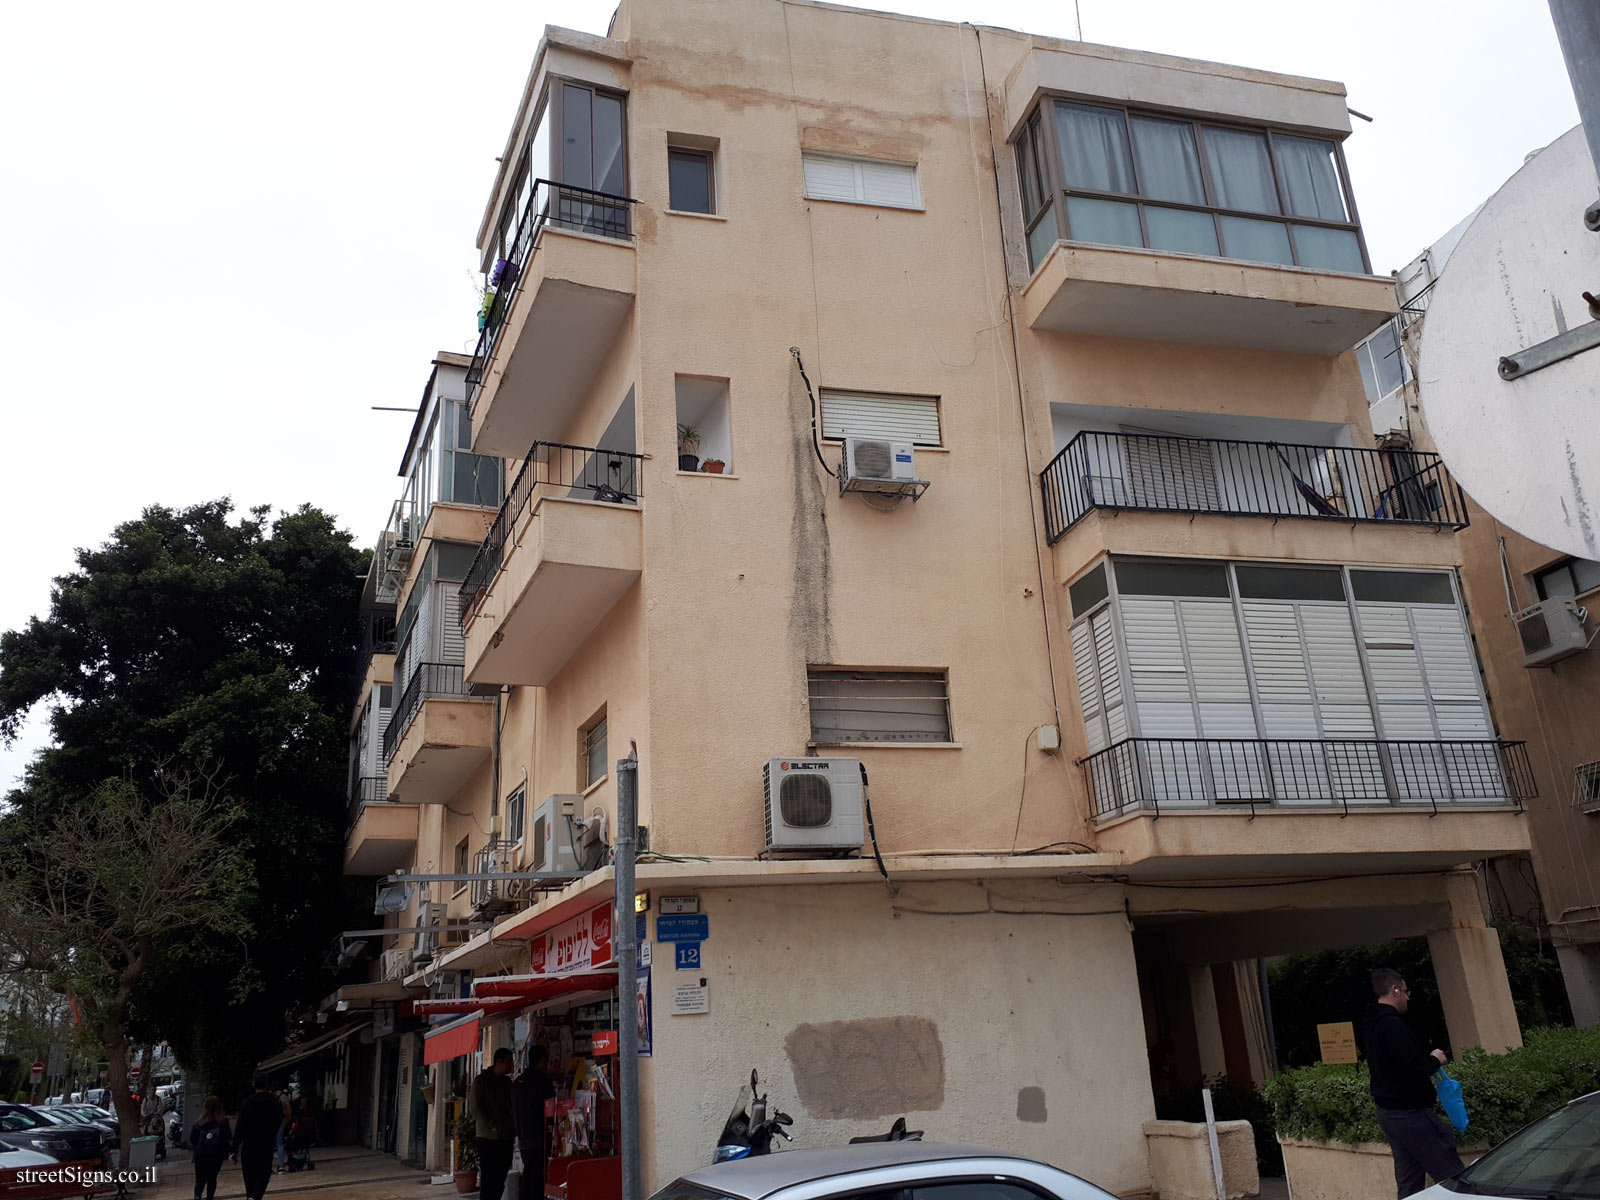 The house of Yehuda Fuchs - Ashtori HaFarhi St 12, Tel Aviv-Yafo, Israel